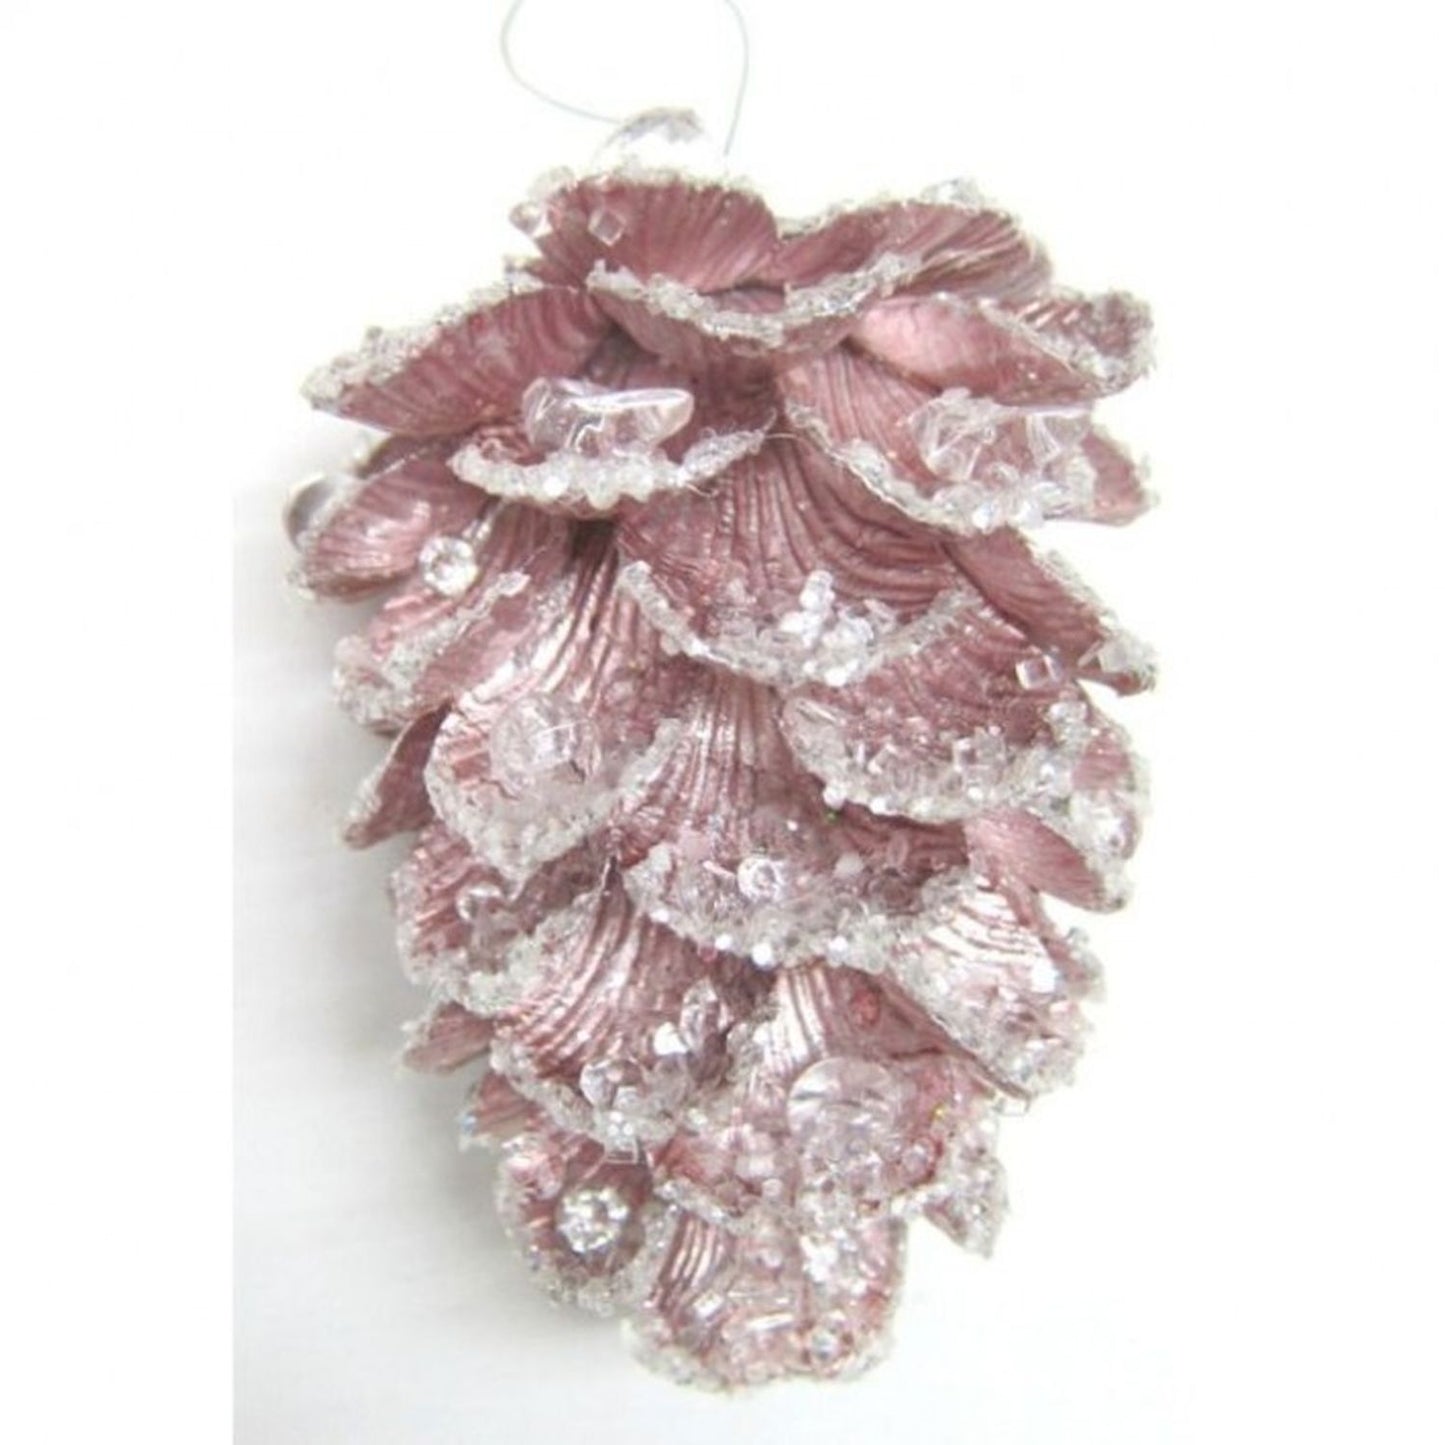 Regency International 5.5" Jewel Encrusted Pinecone Ornament